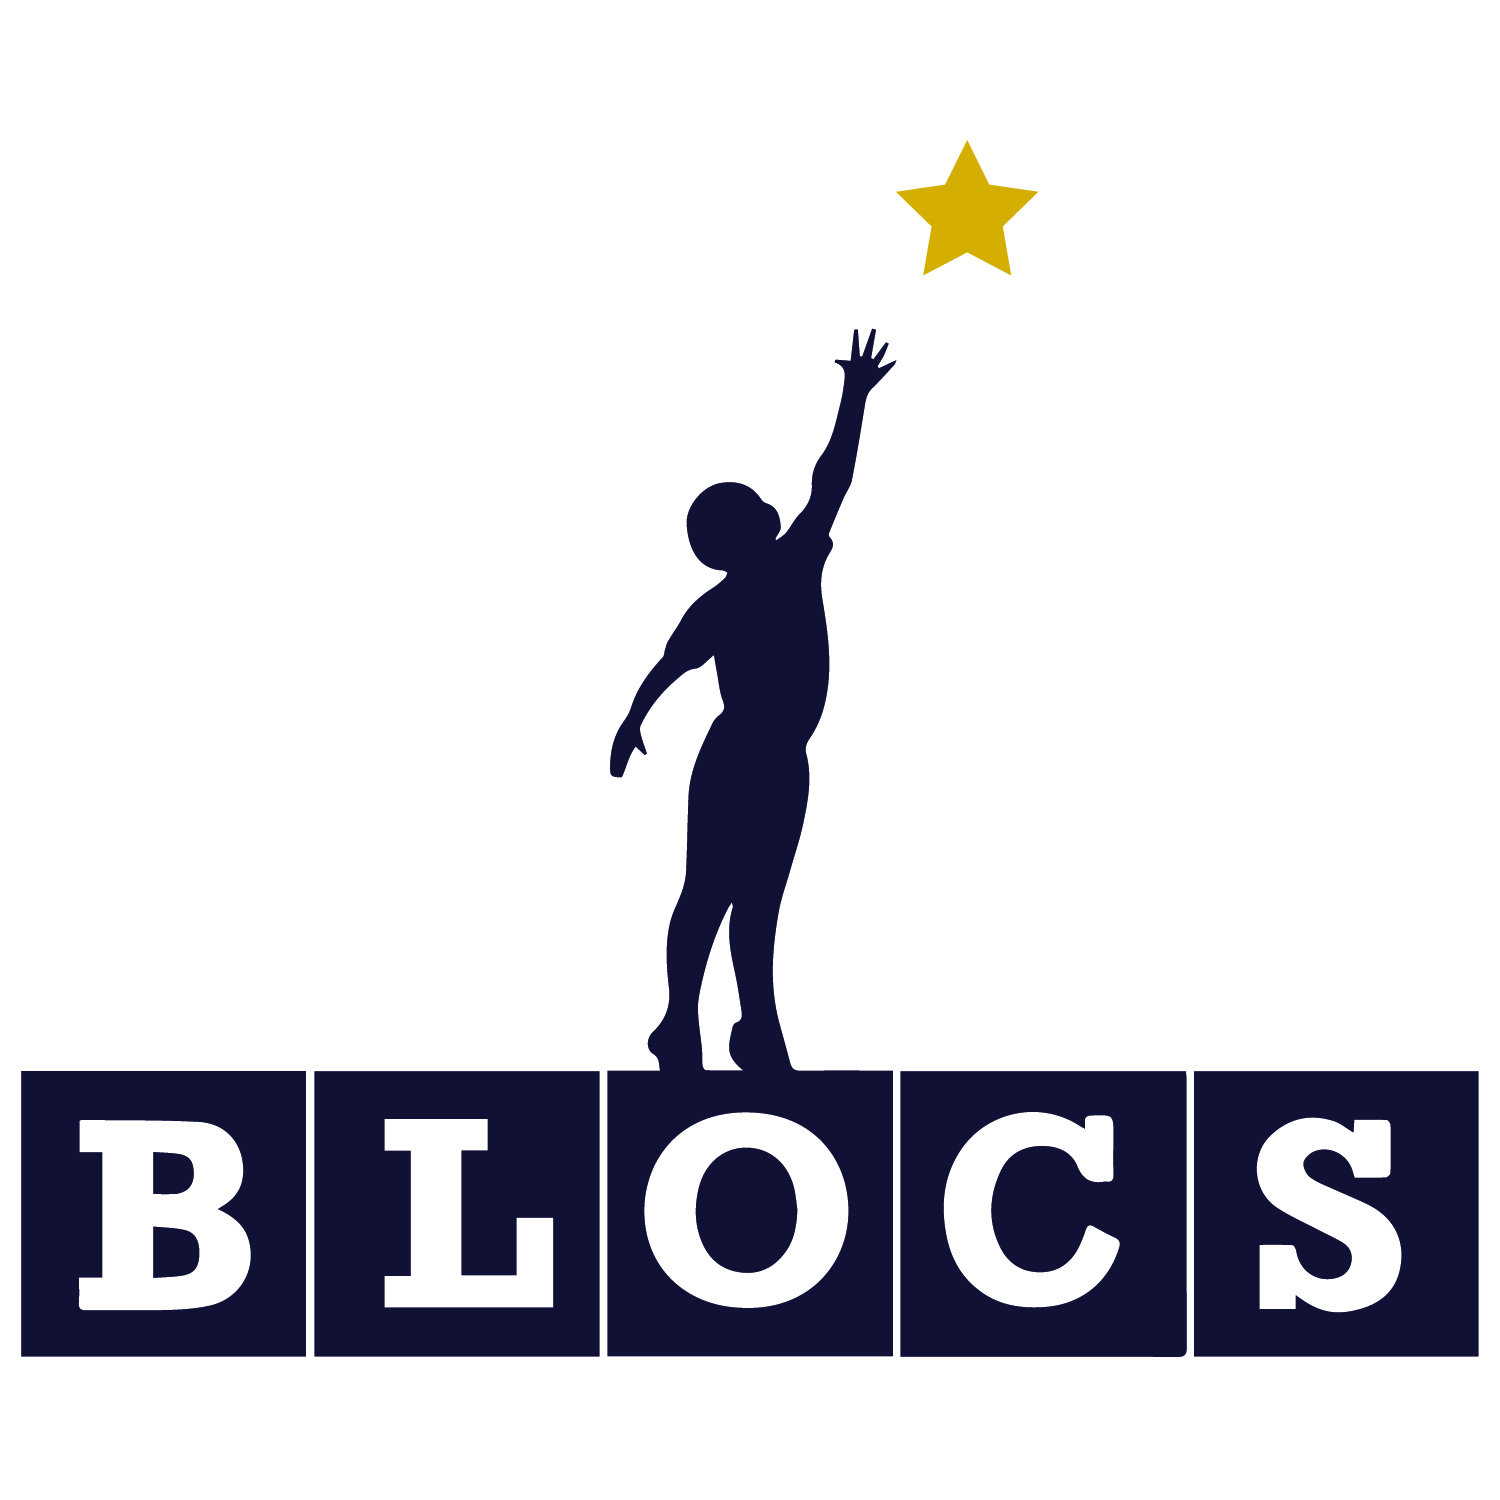 Business Leadership Organized for Catholic Schools (BLOCS)